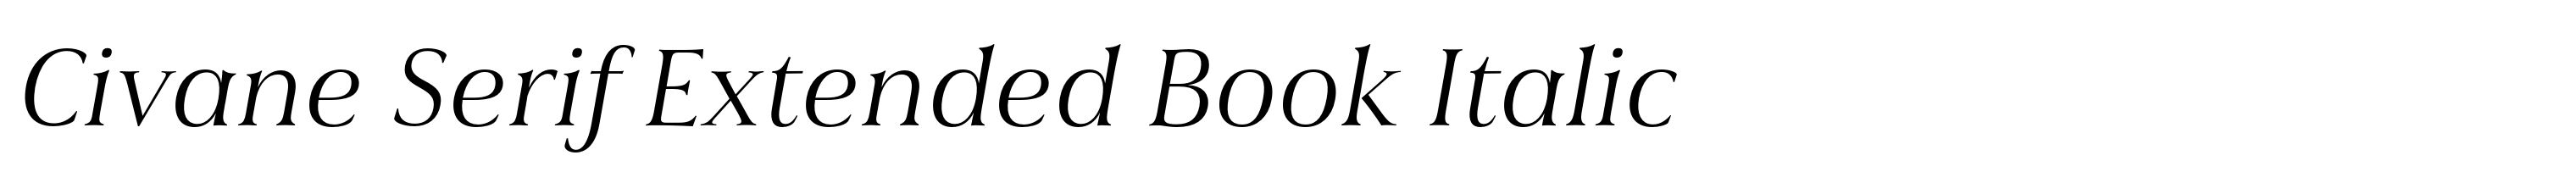 Civane Serif Extended Book Italic